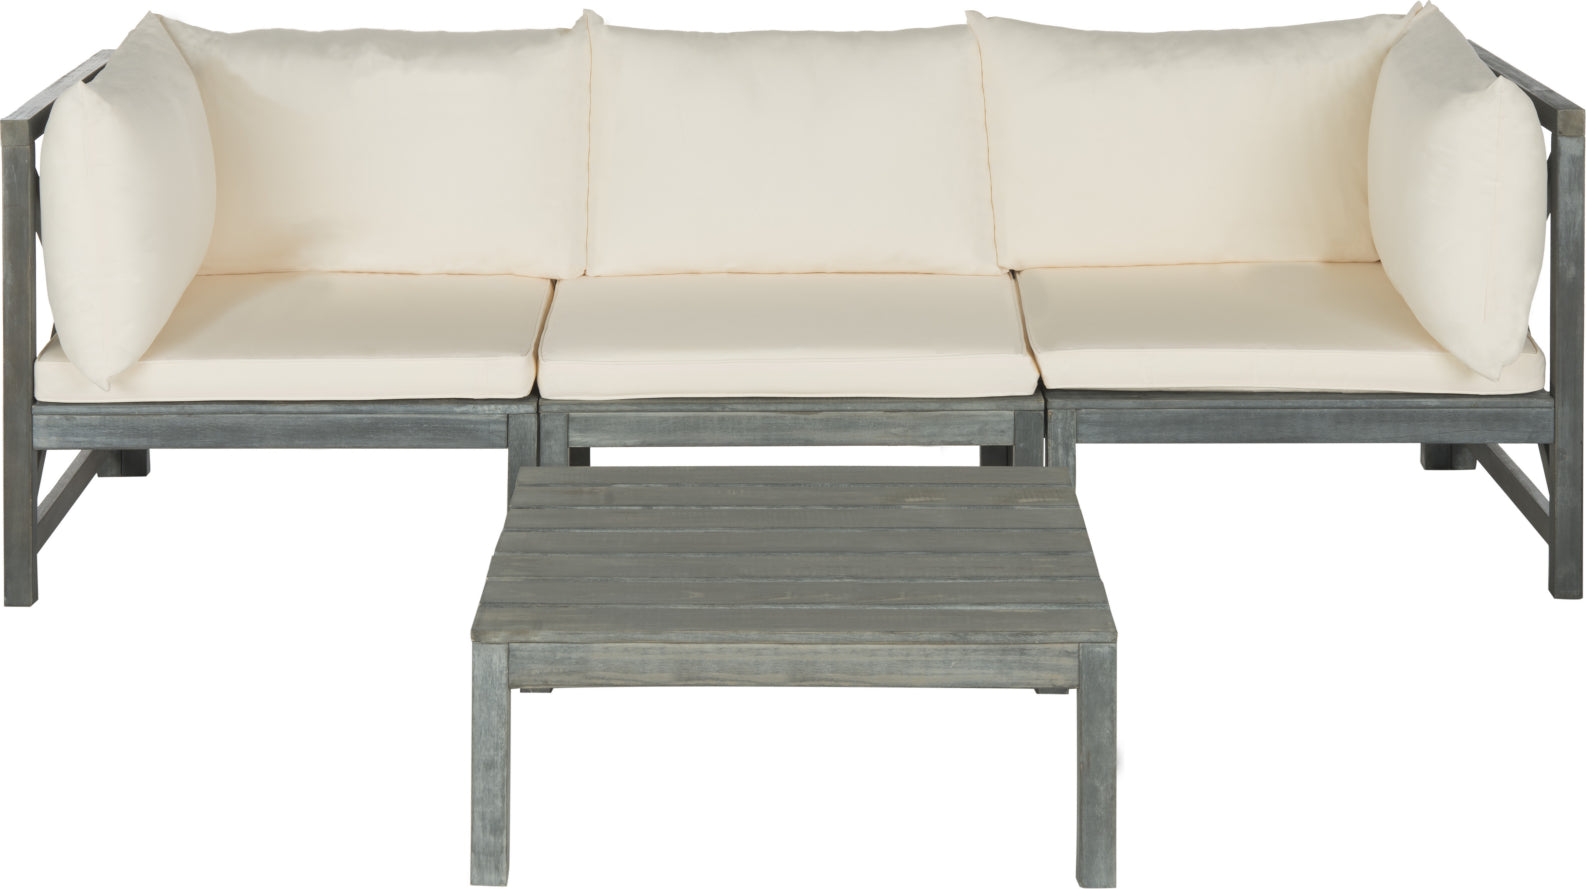 Safavieh Lynwood Modular Outdoor Sectional Ash Grey/Beige Furniture main image